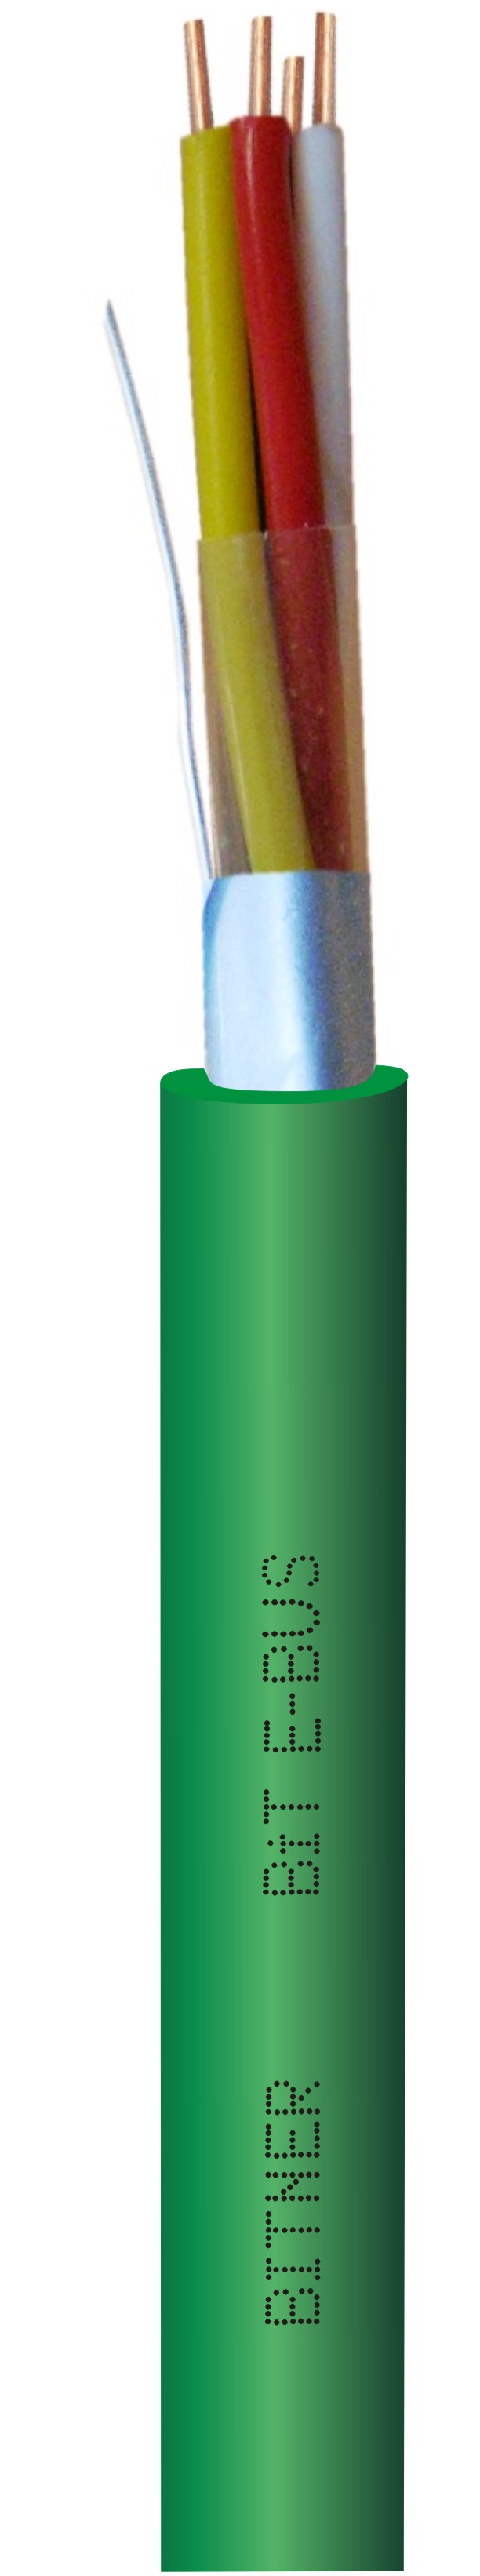 E-BUS 2x2x0,8mm PCV zielony - EB0005 - KP BITNER